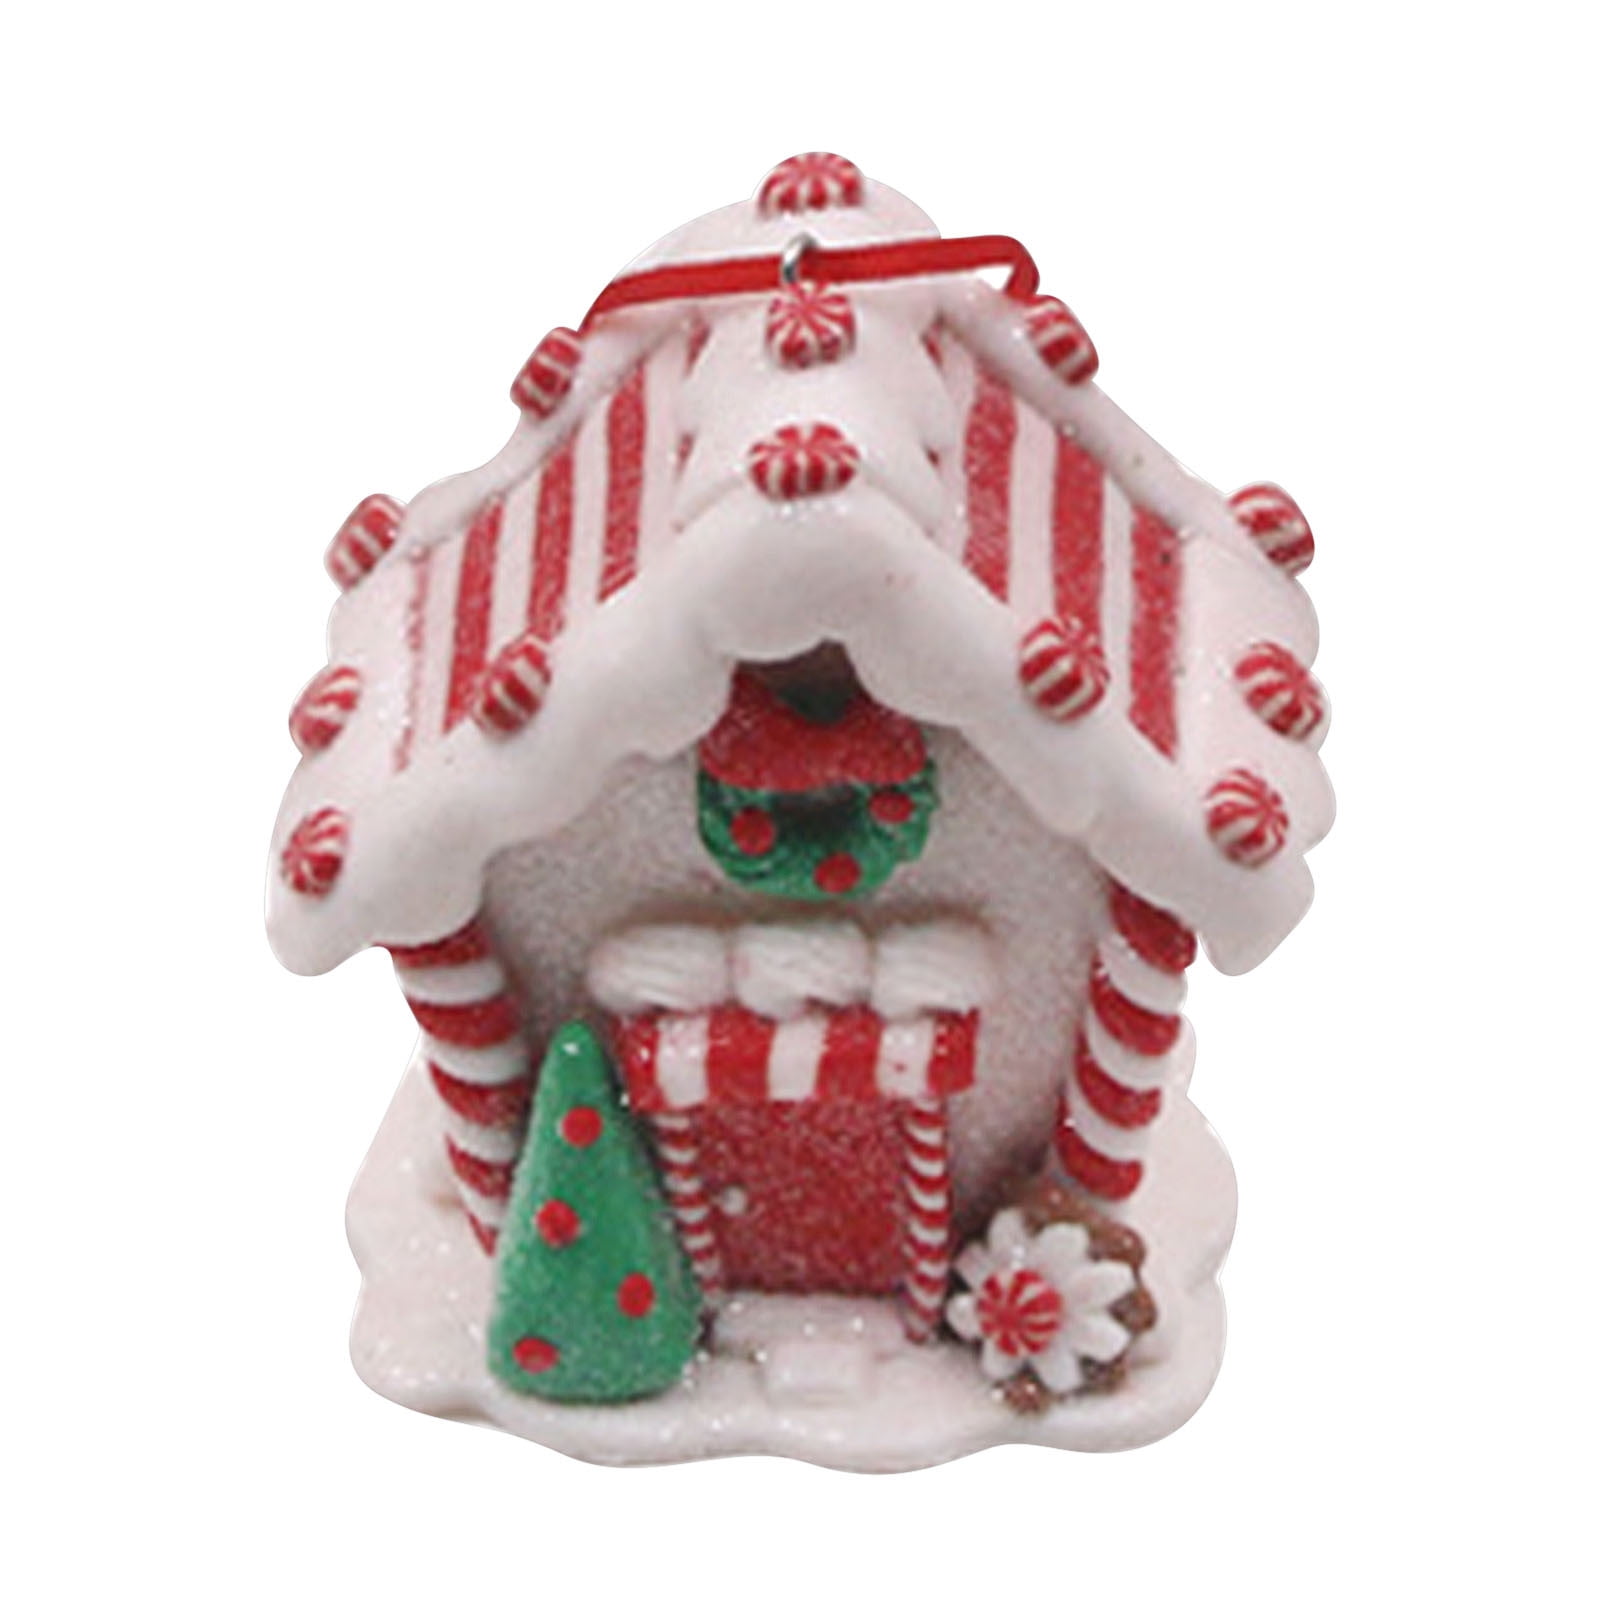 Santa Claus Snowman Candy Cane Ornament Christmas Tree Decoration Ornament 